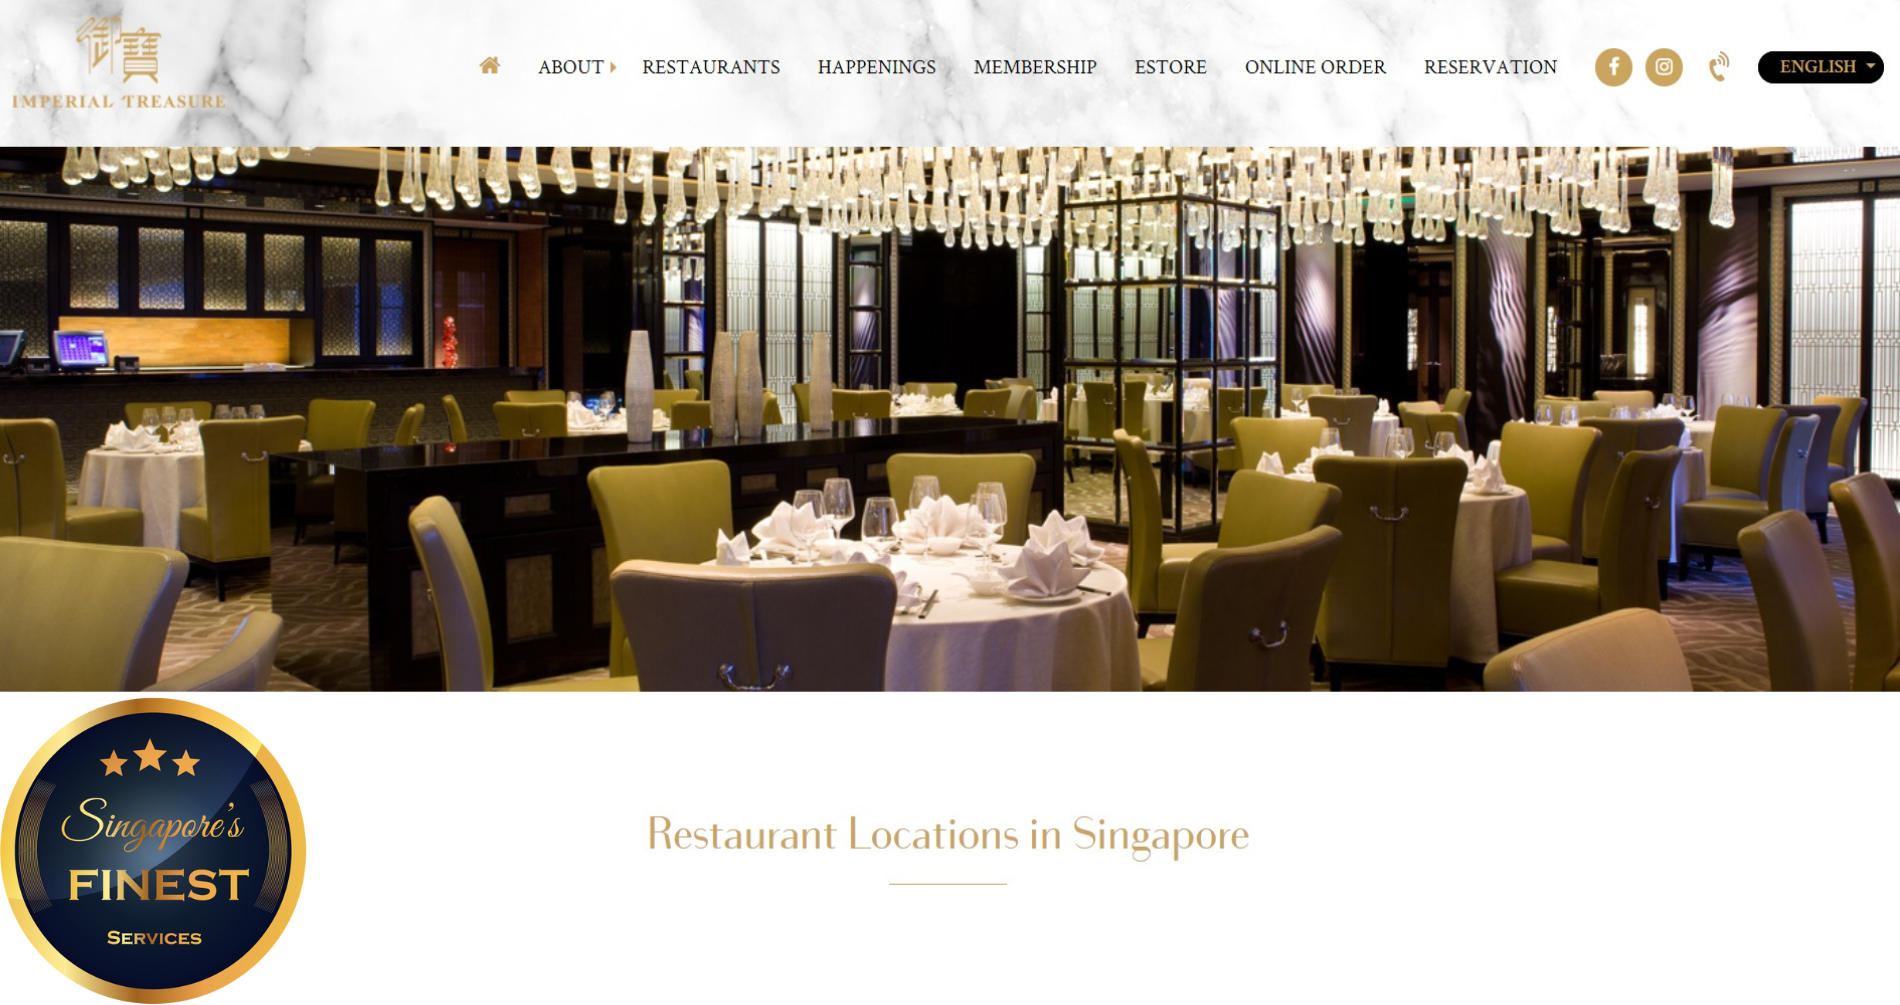 Imperial Treasure Super Peking Duck - Chinese Restaurant Singapore